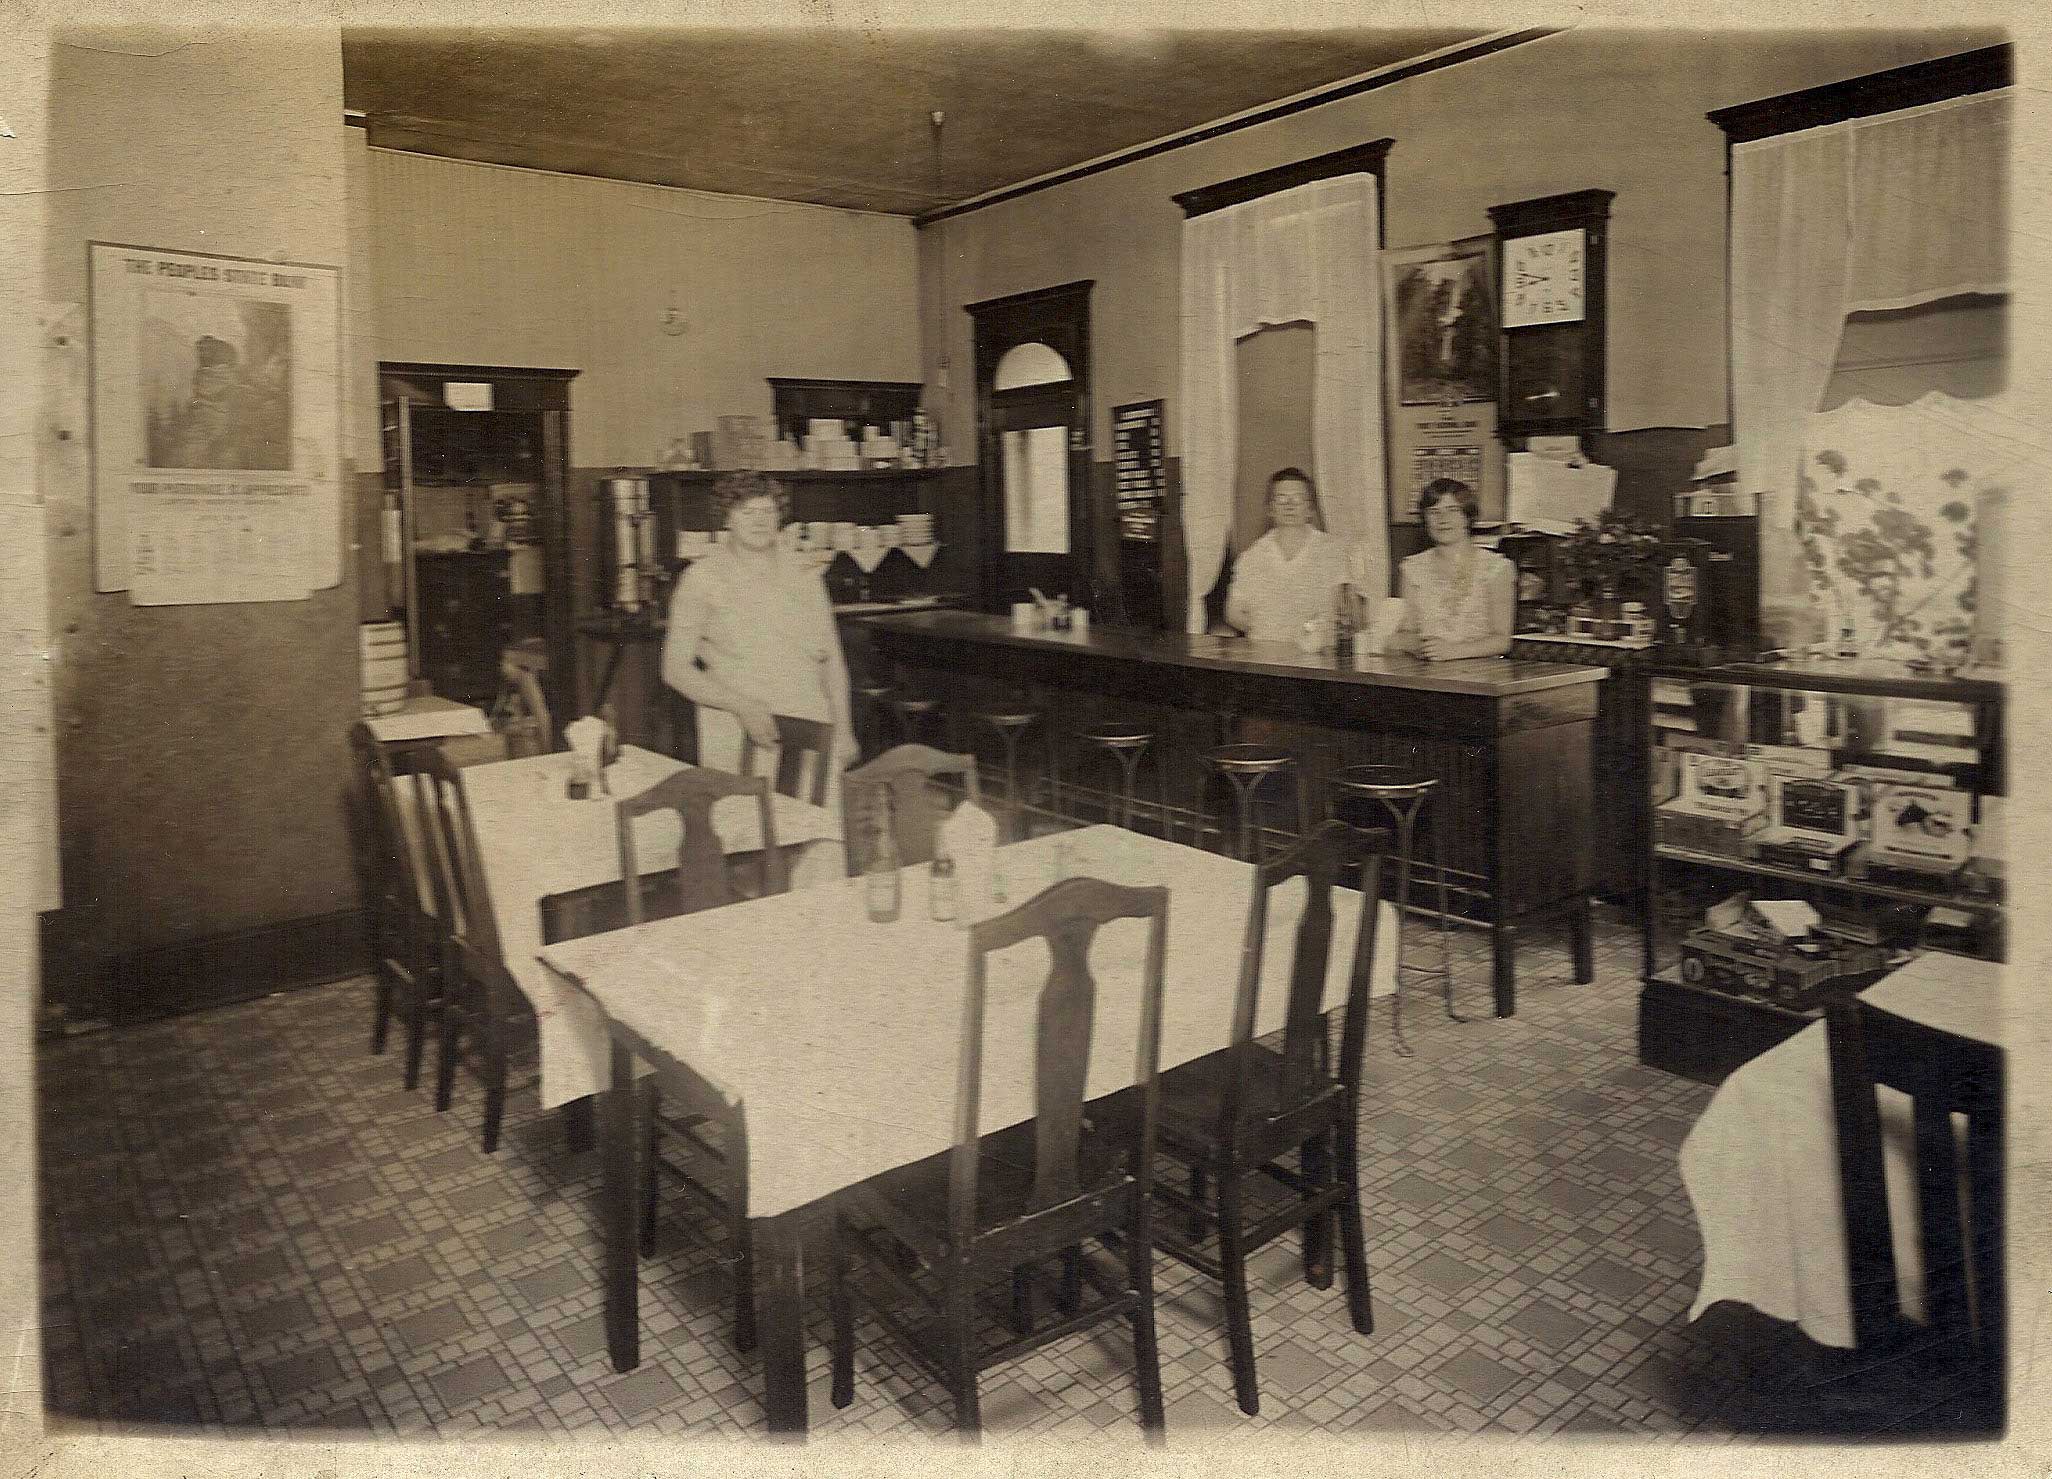 Inside the Linton Cafe, abt 1930